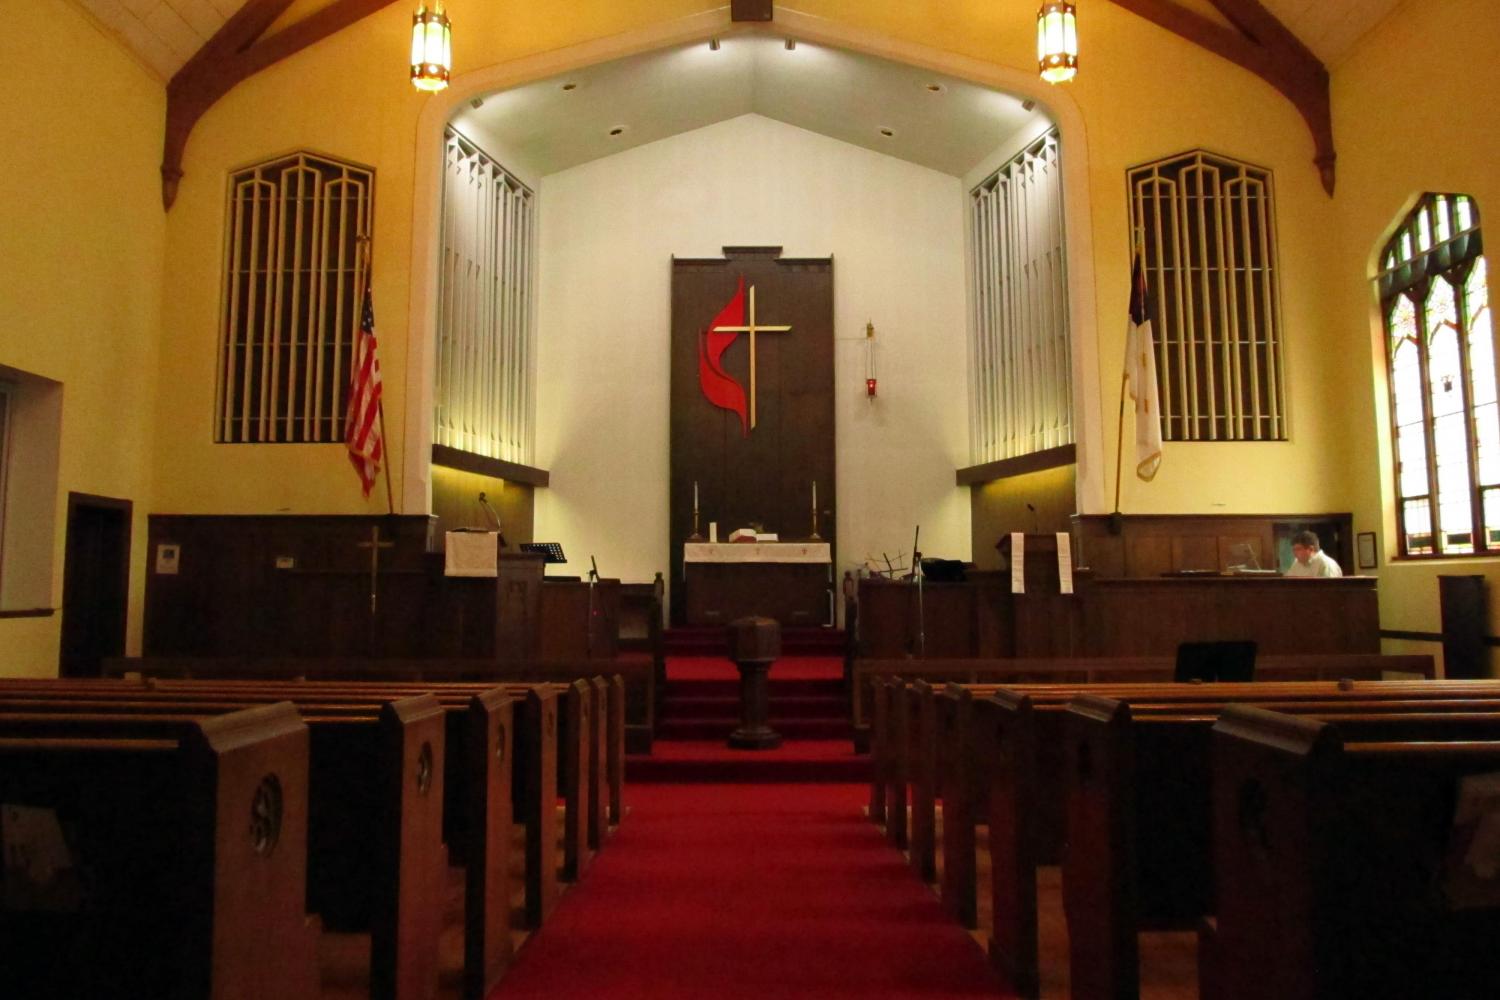 Pews, sanctuary, cross, UMC, United Methodist Church